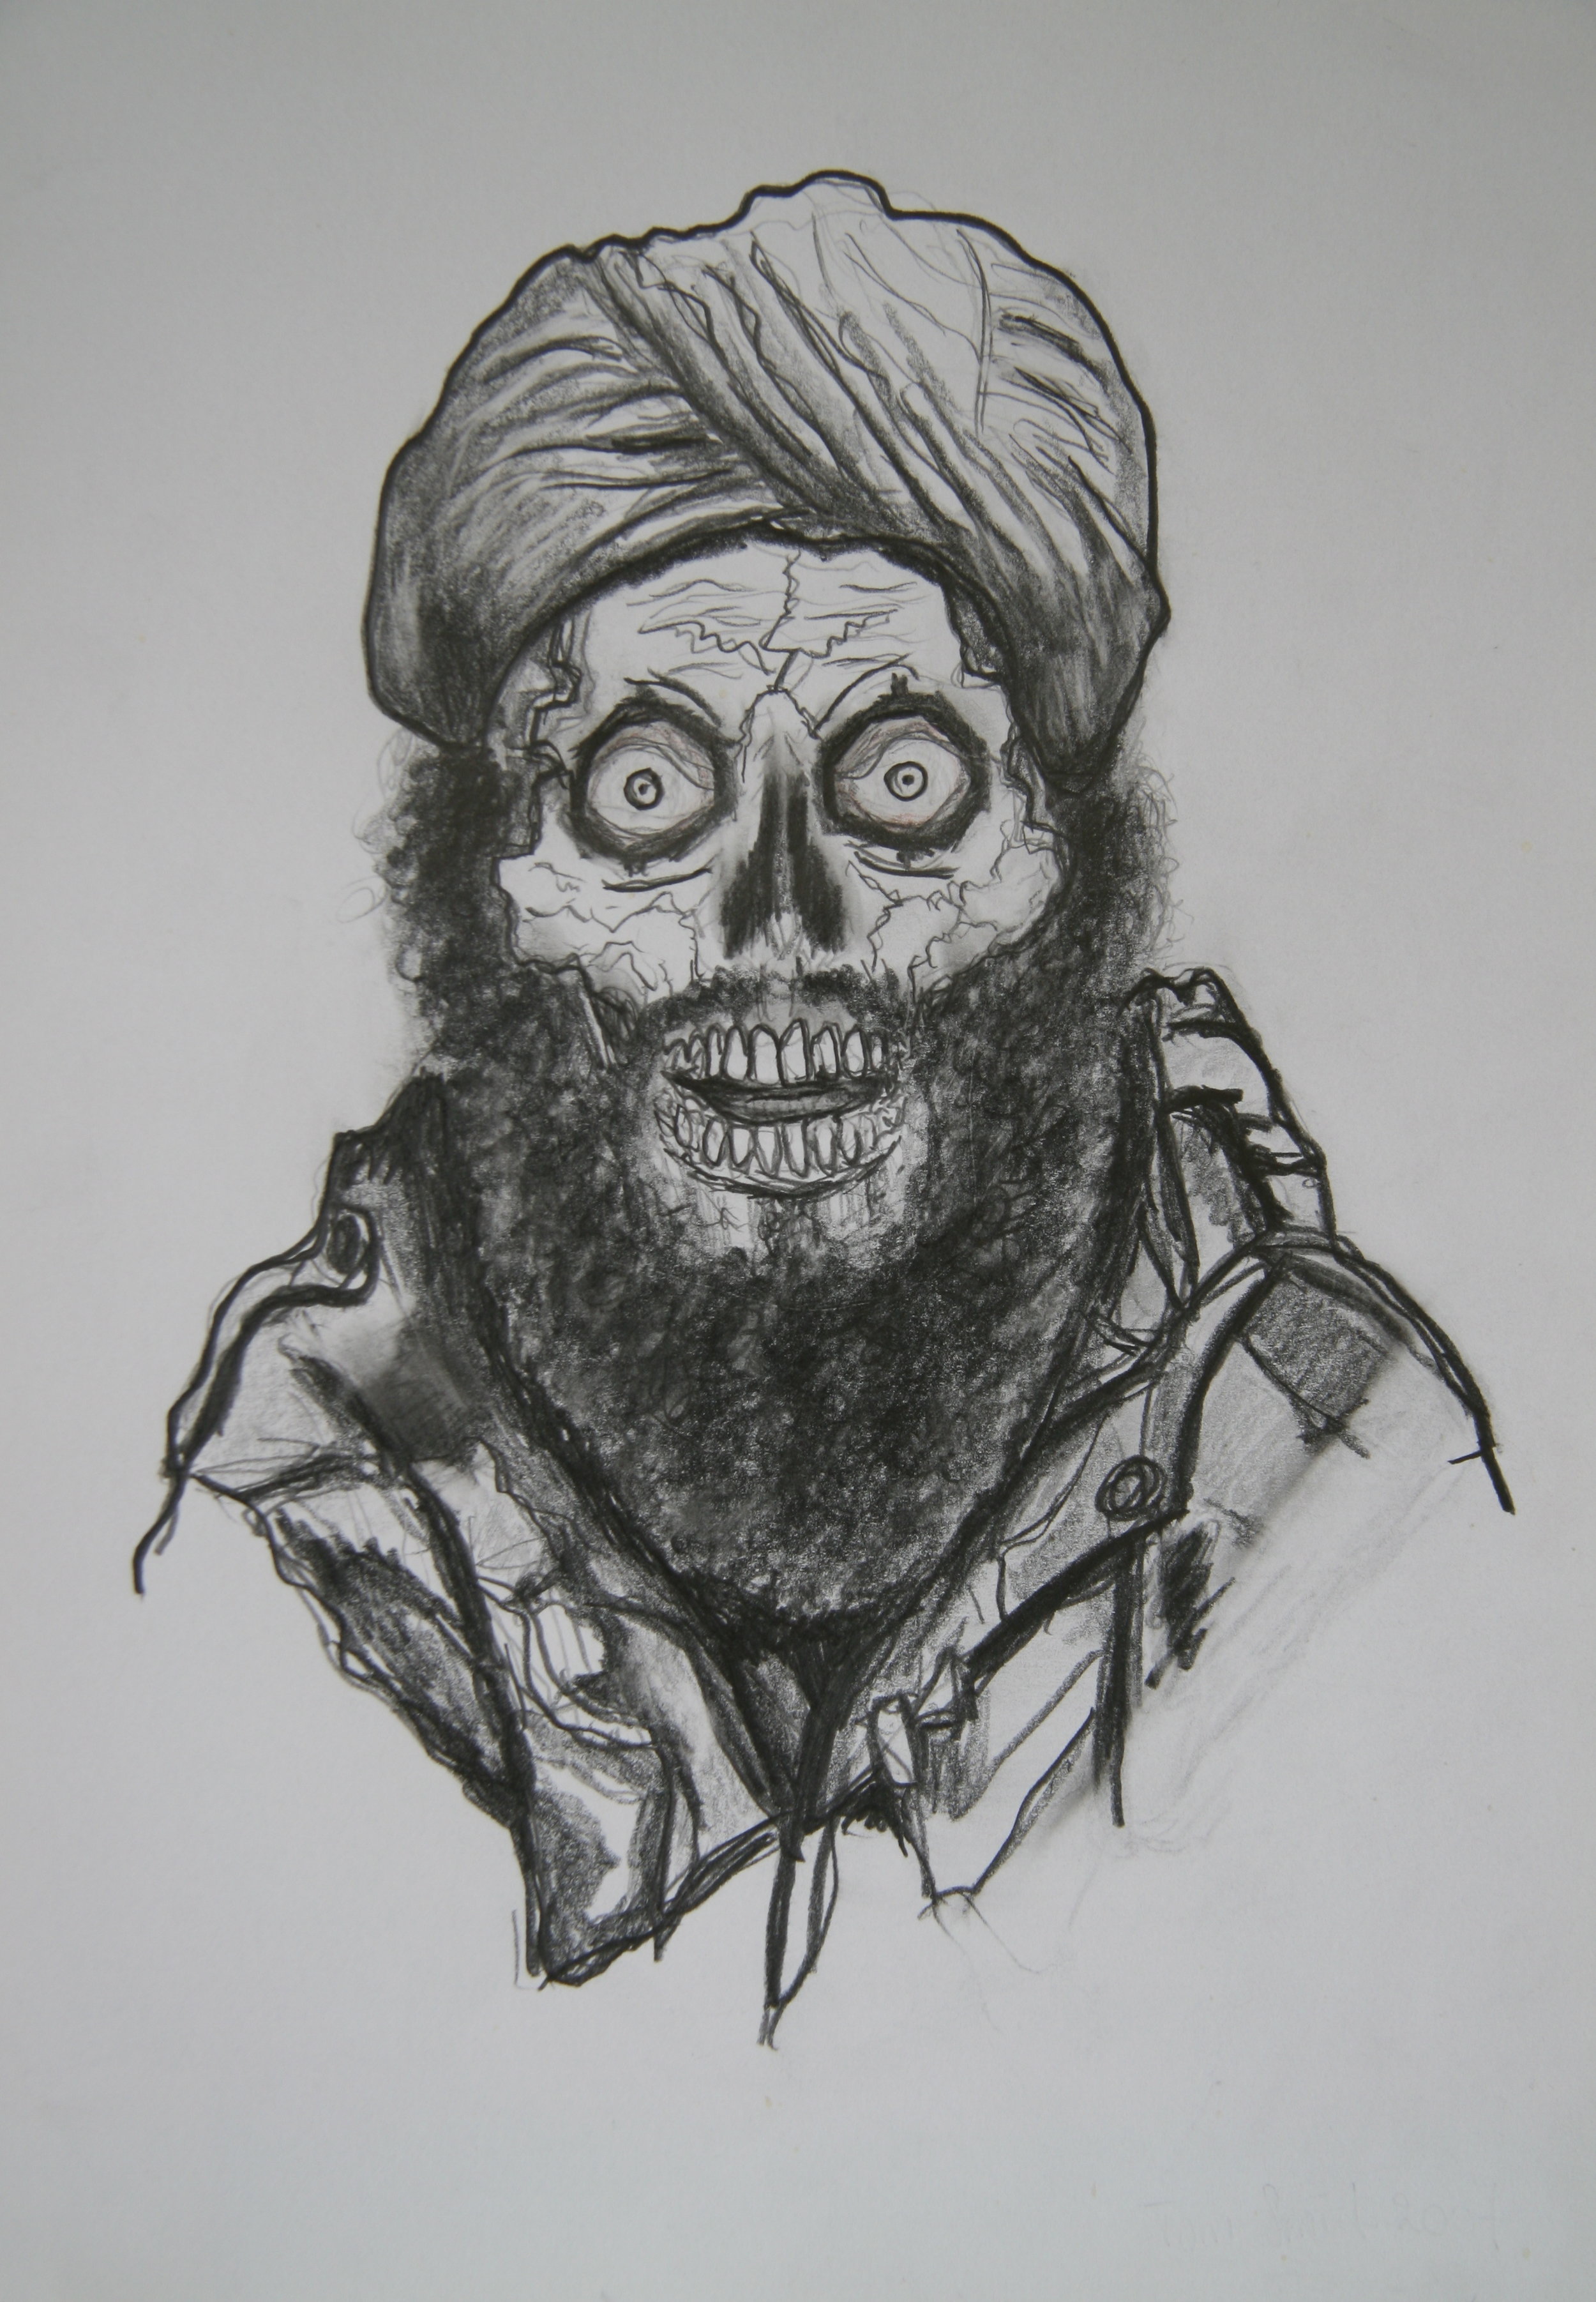 Skull 15, 30x21cm, pencil on paper